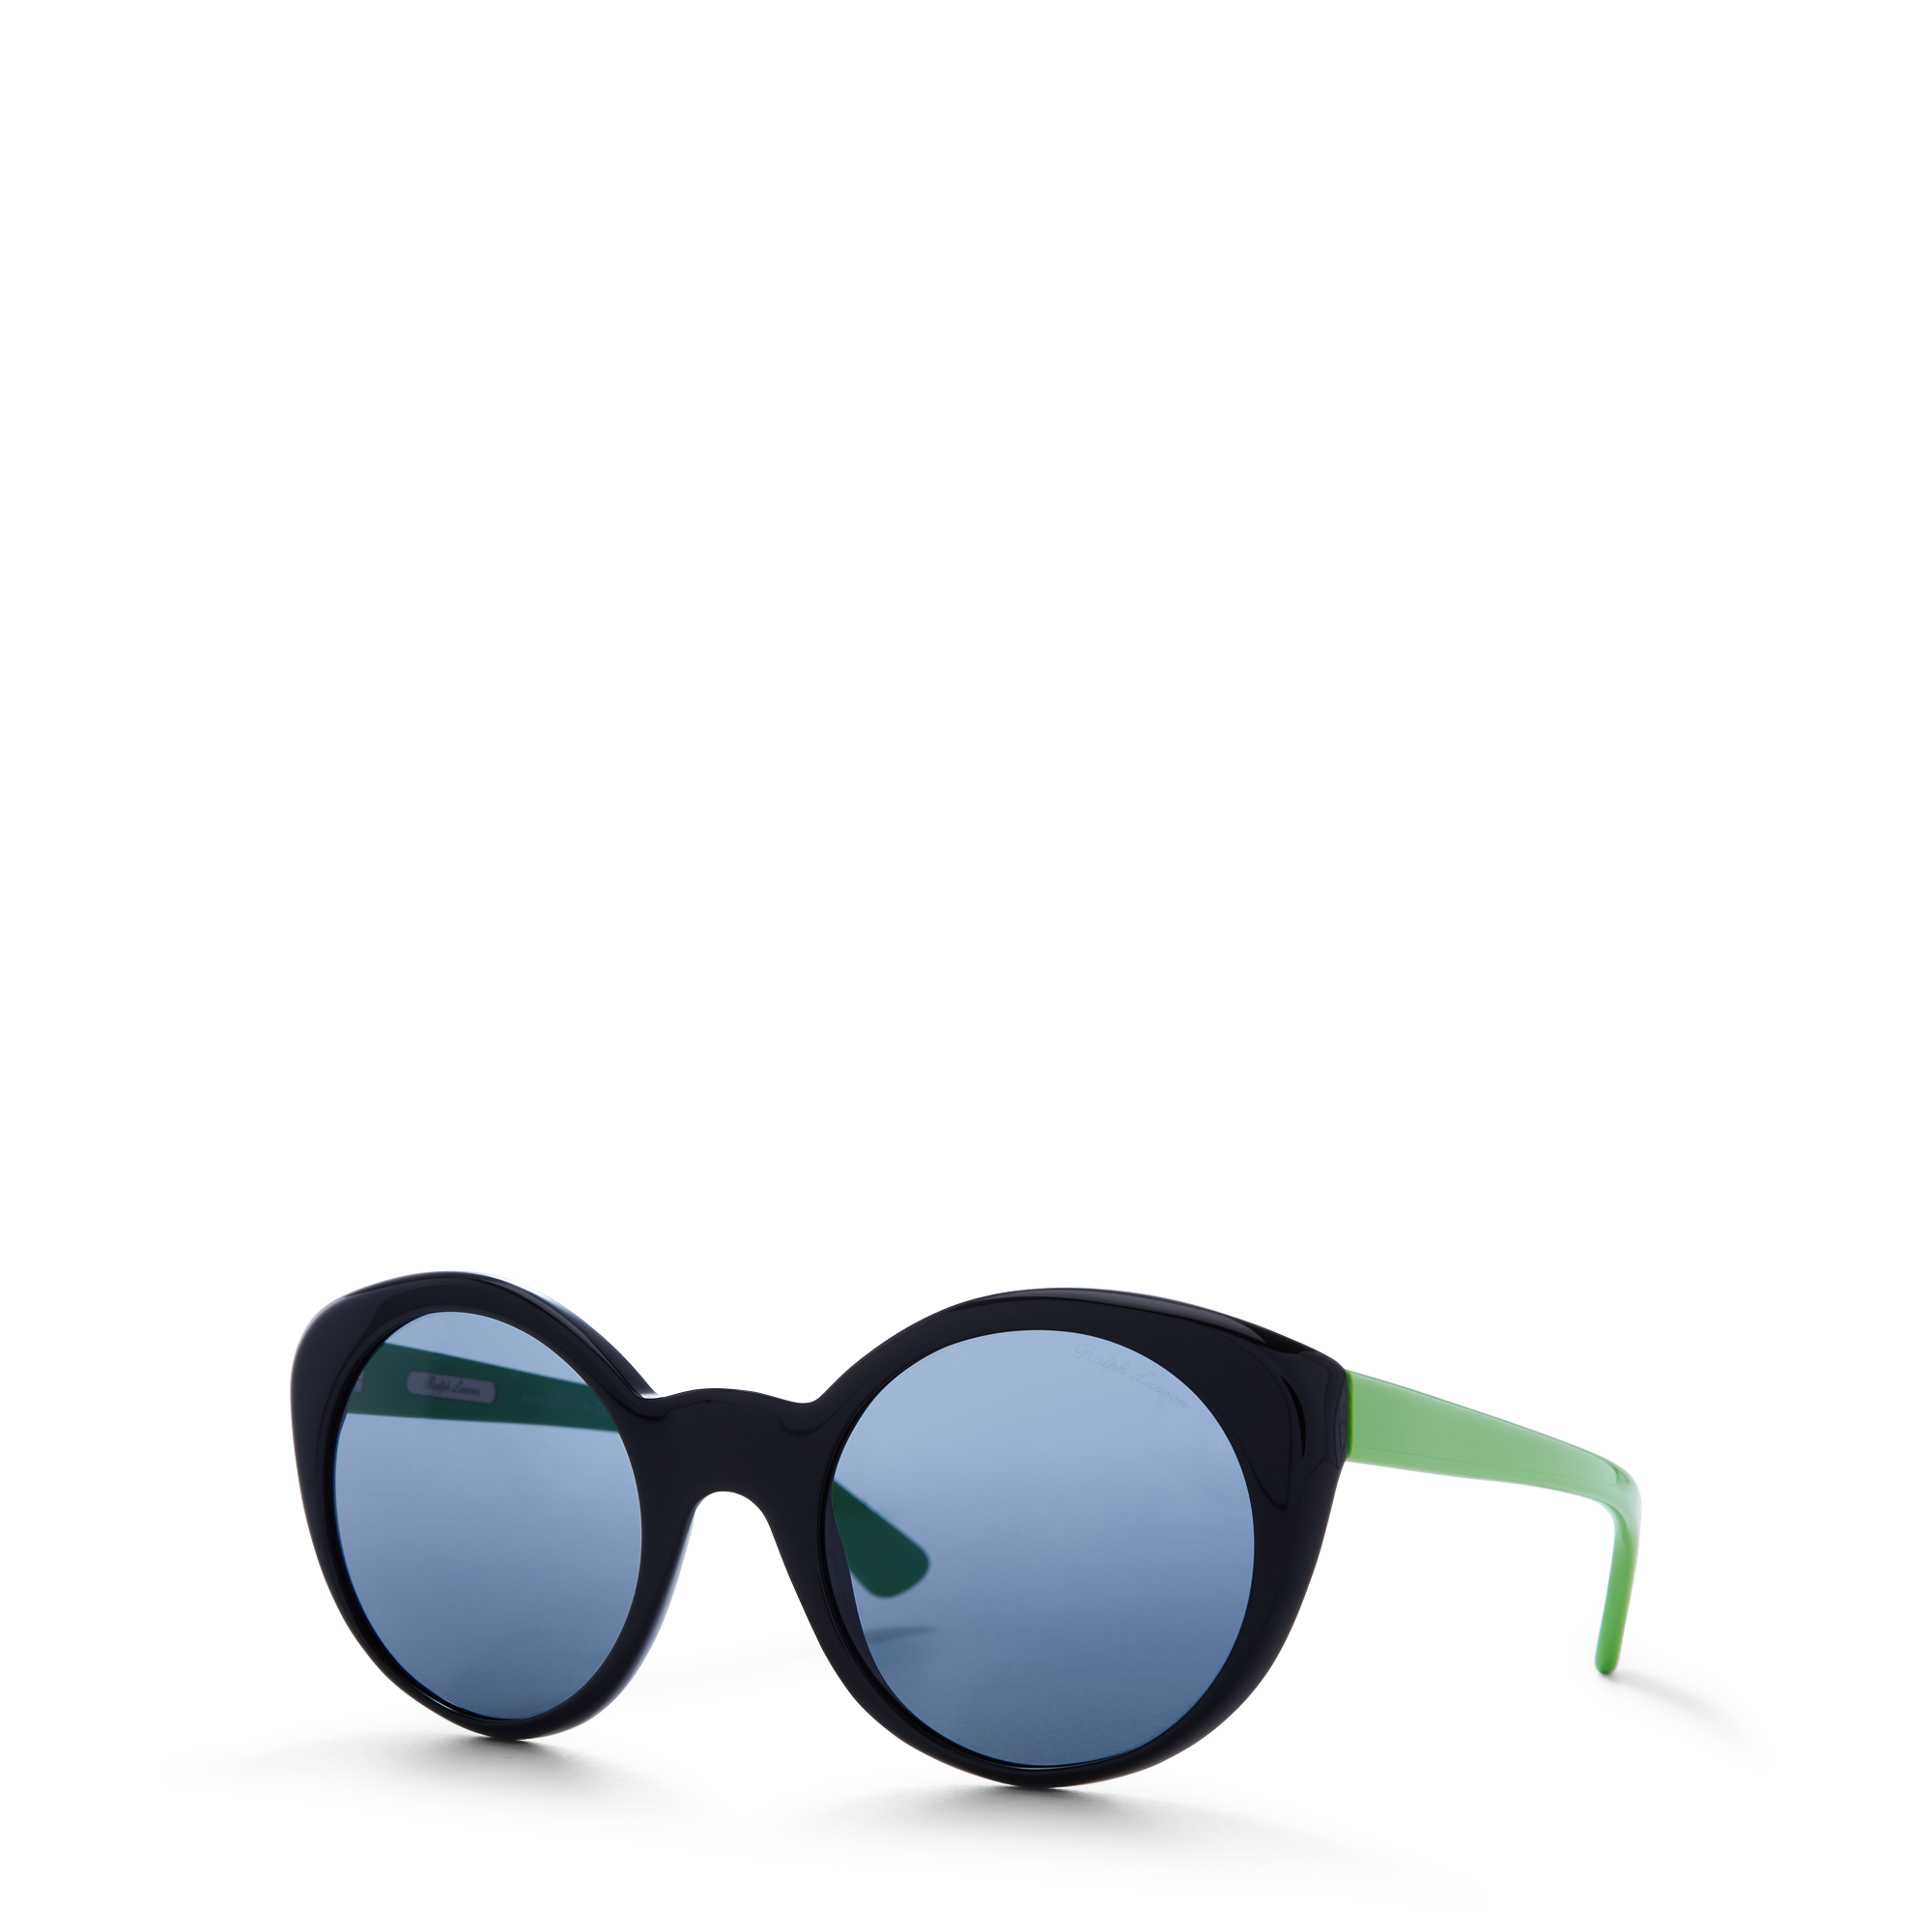 Ralph Lauren Round Sunglasses. 2